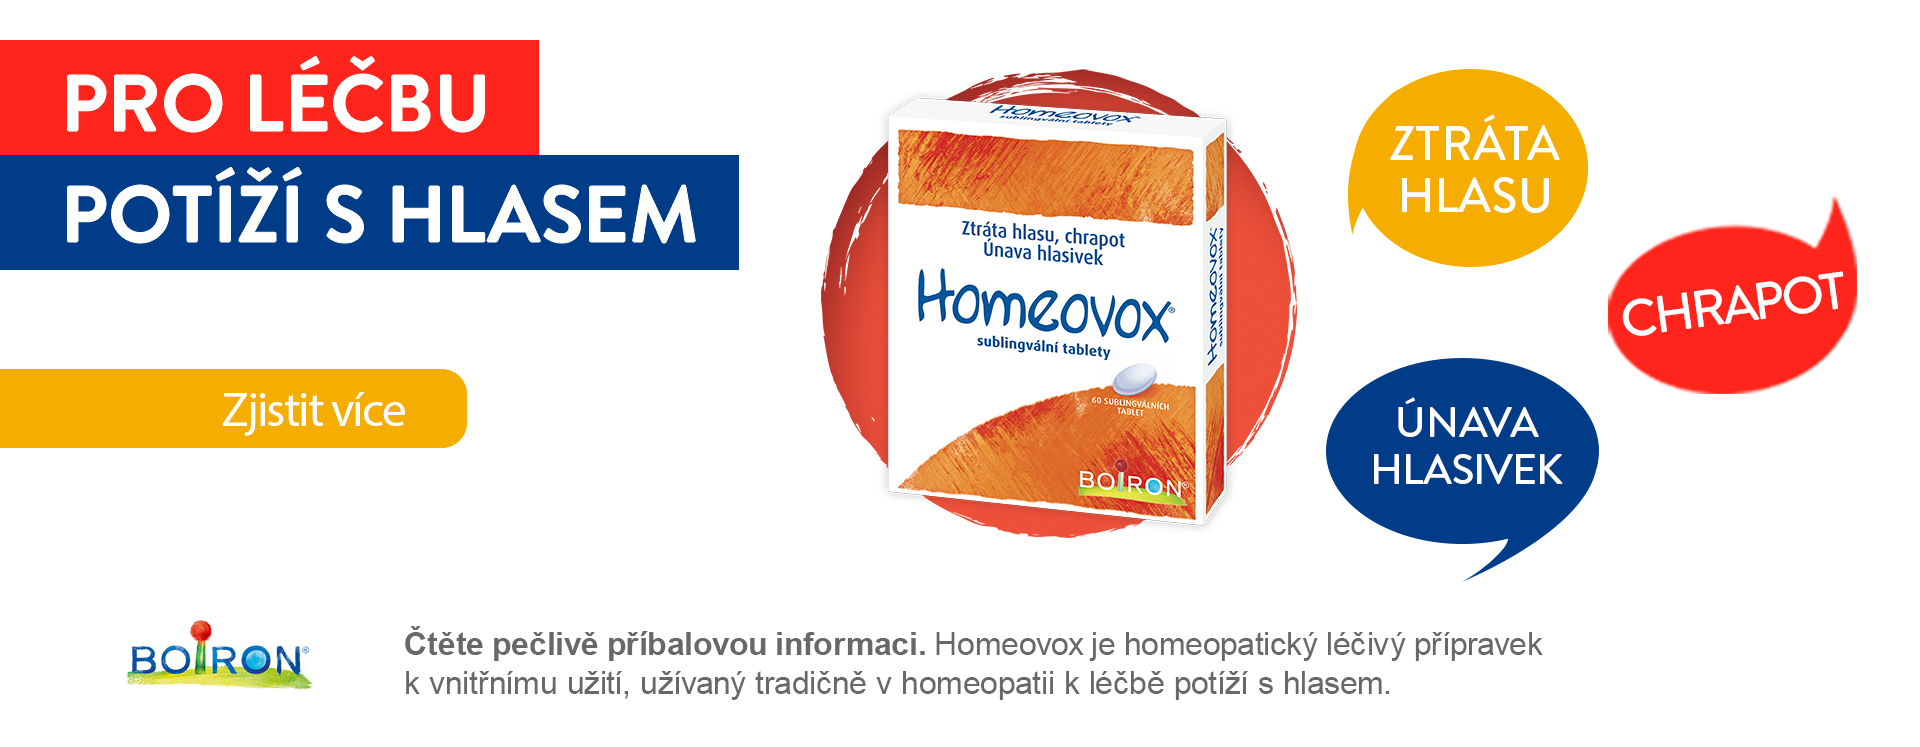 Onlinelekarna.cz | Homeovox